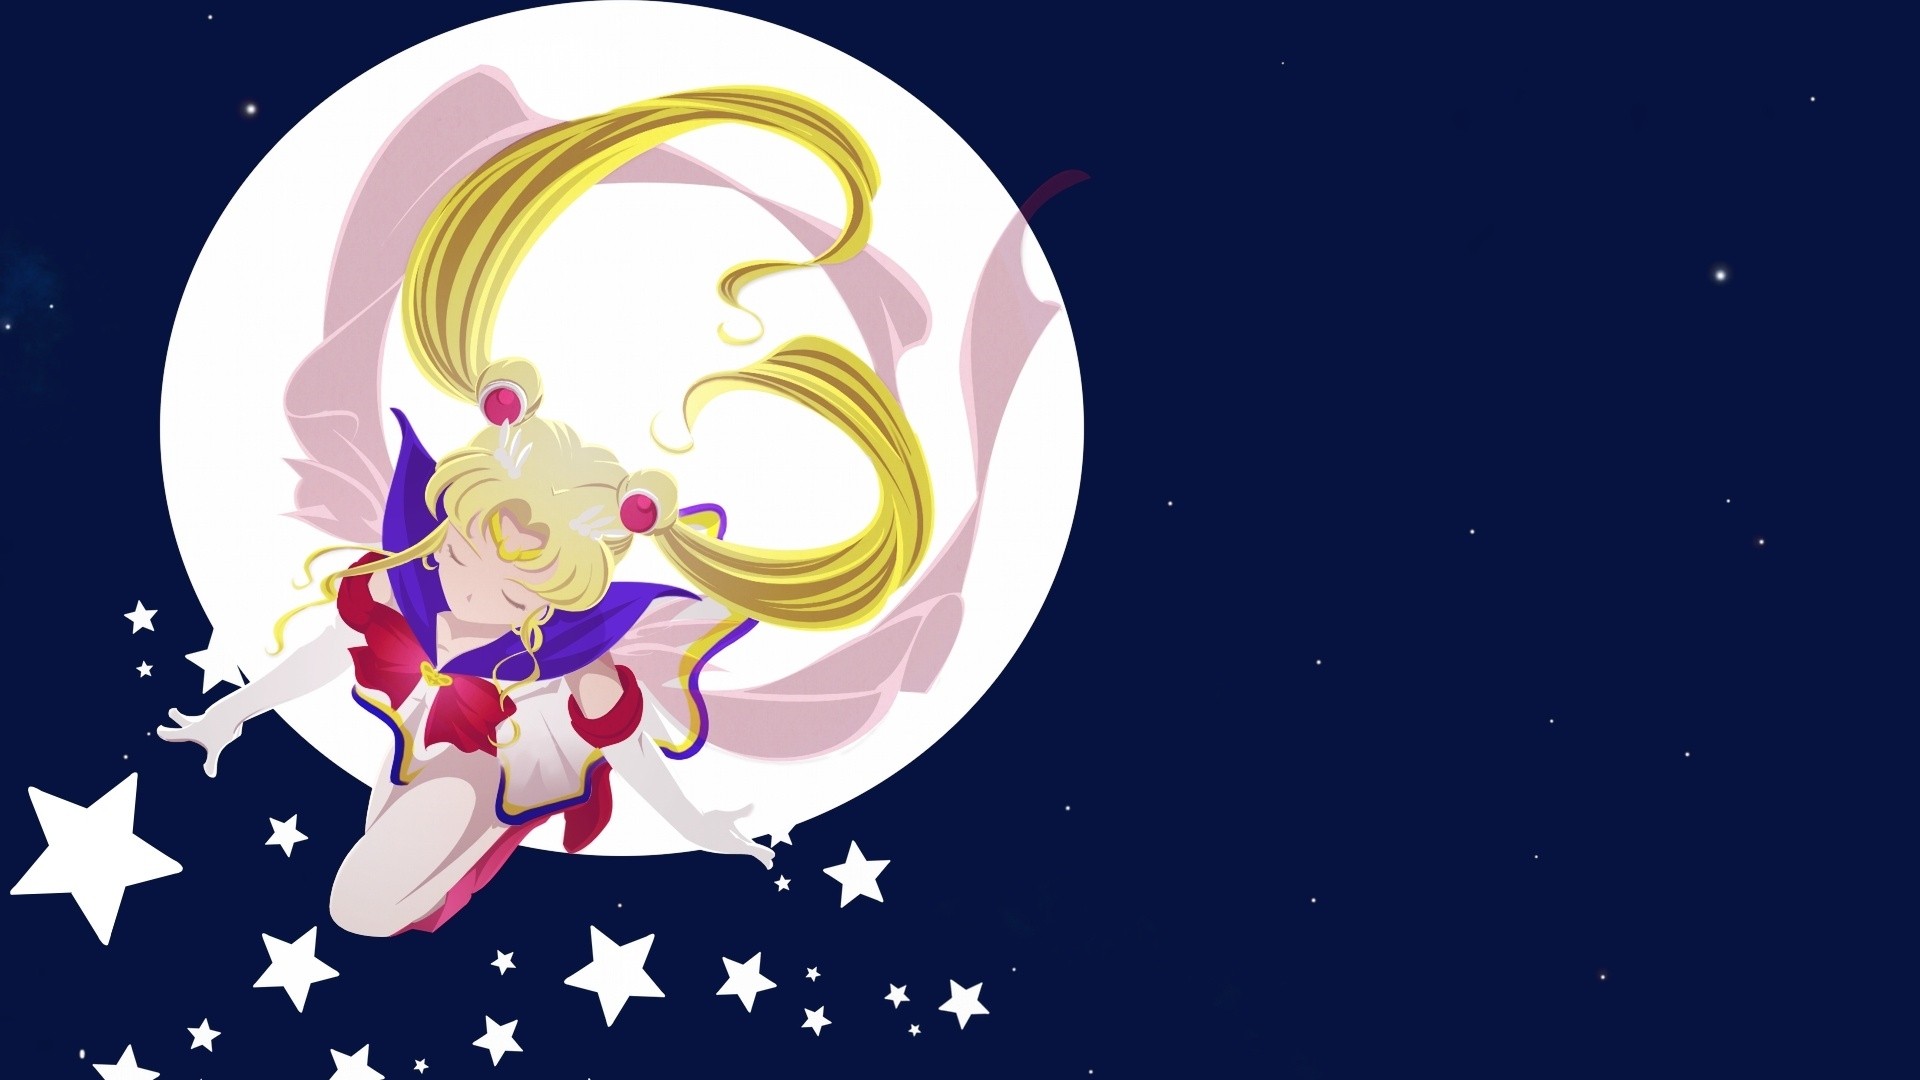 Sailor Moon computer wallpaper